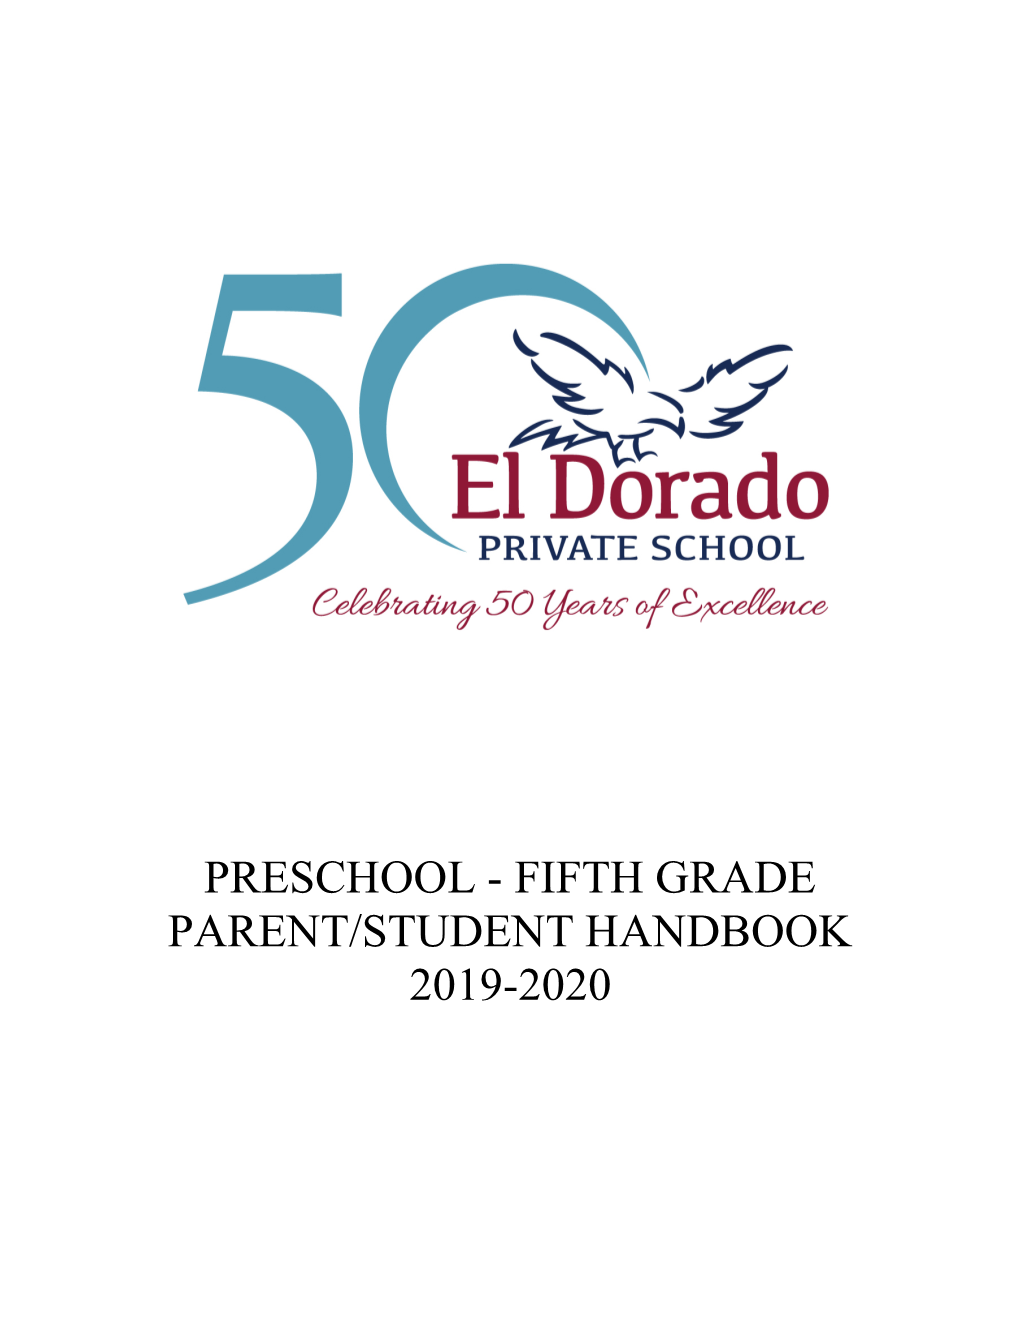 Preschool - Fifth Grade Parent/Student Handbook 2019-2020